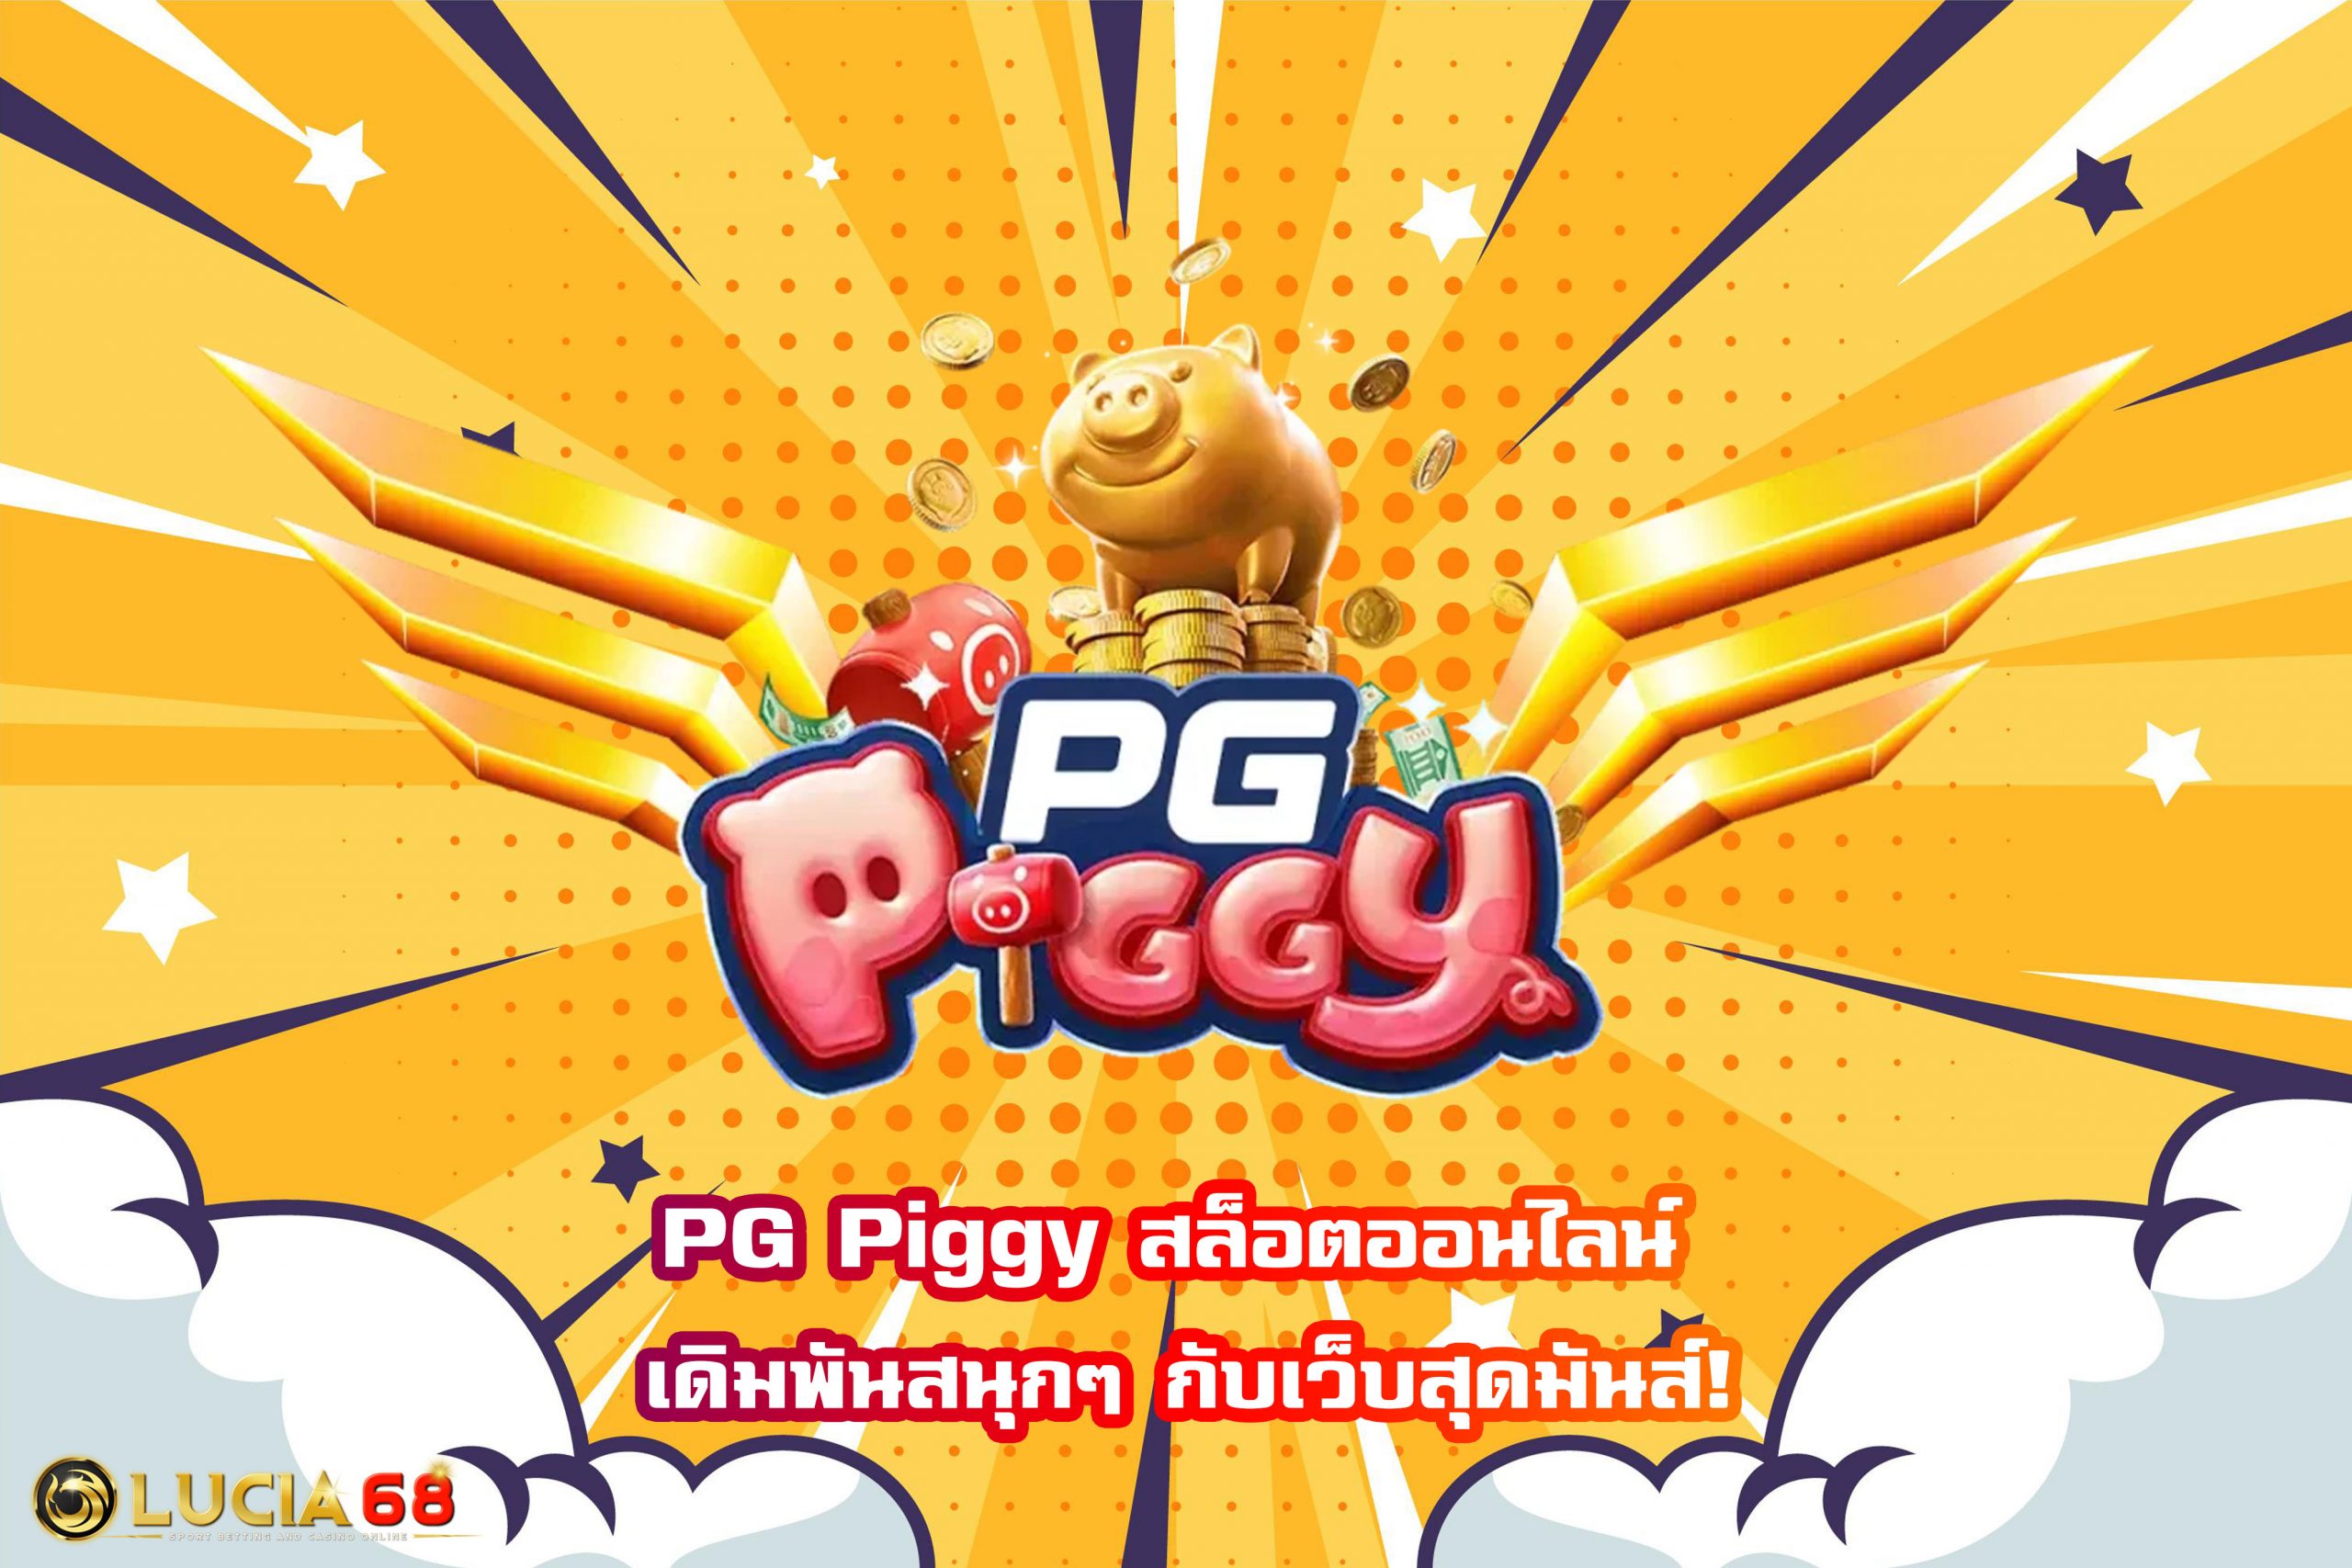 PG Piggy สล็อตออนไลน์ เดิมพันสนุกๆ กับเว็บสุดมันส์!